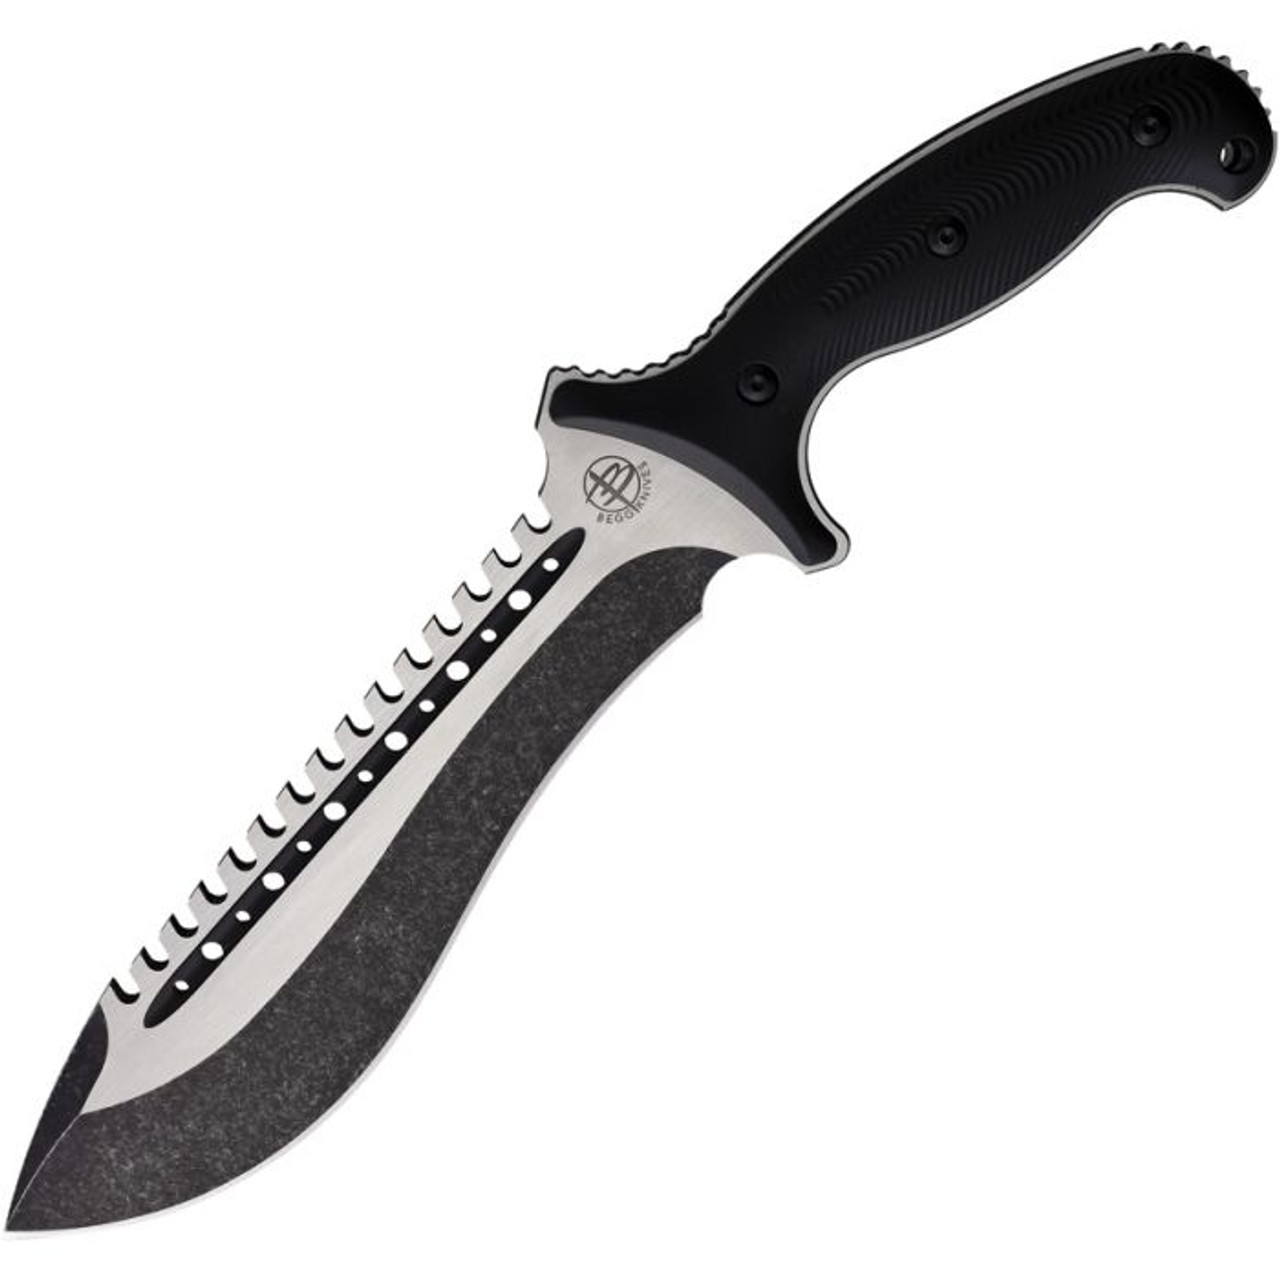 Begg Knives Bolo Fixed Blade Knife (BG022)- 8" Black and Satin AUS-10A Sawback Bolo Blade, Black Injection Molded Nylon Handle